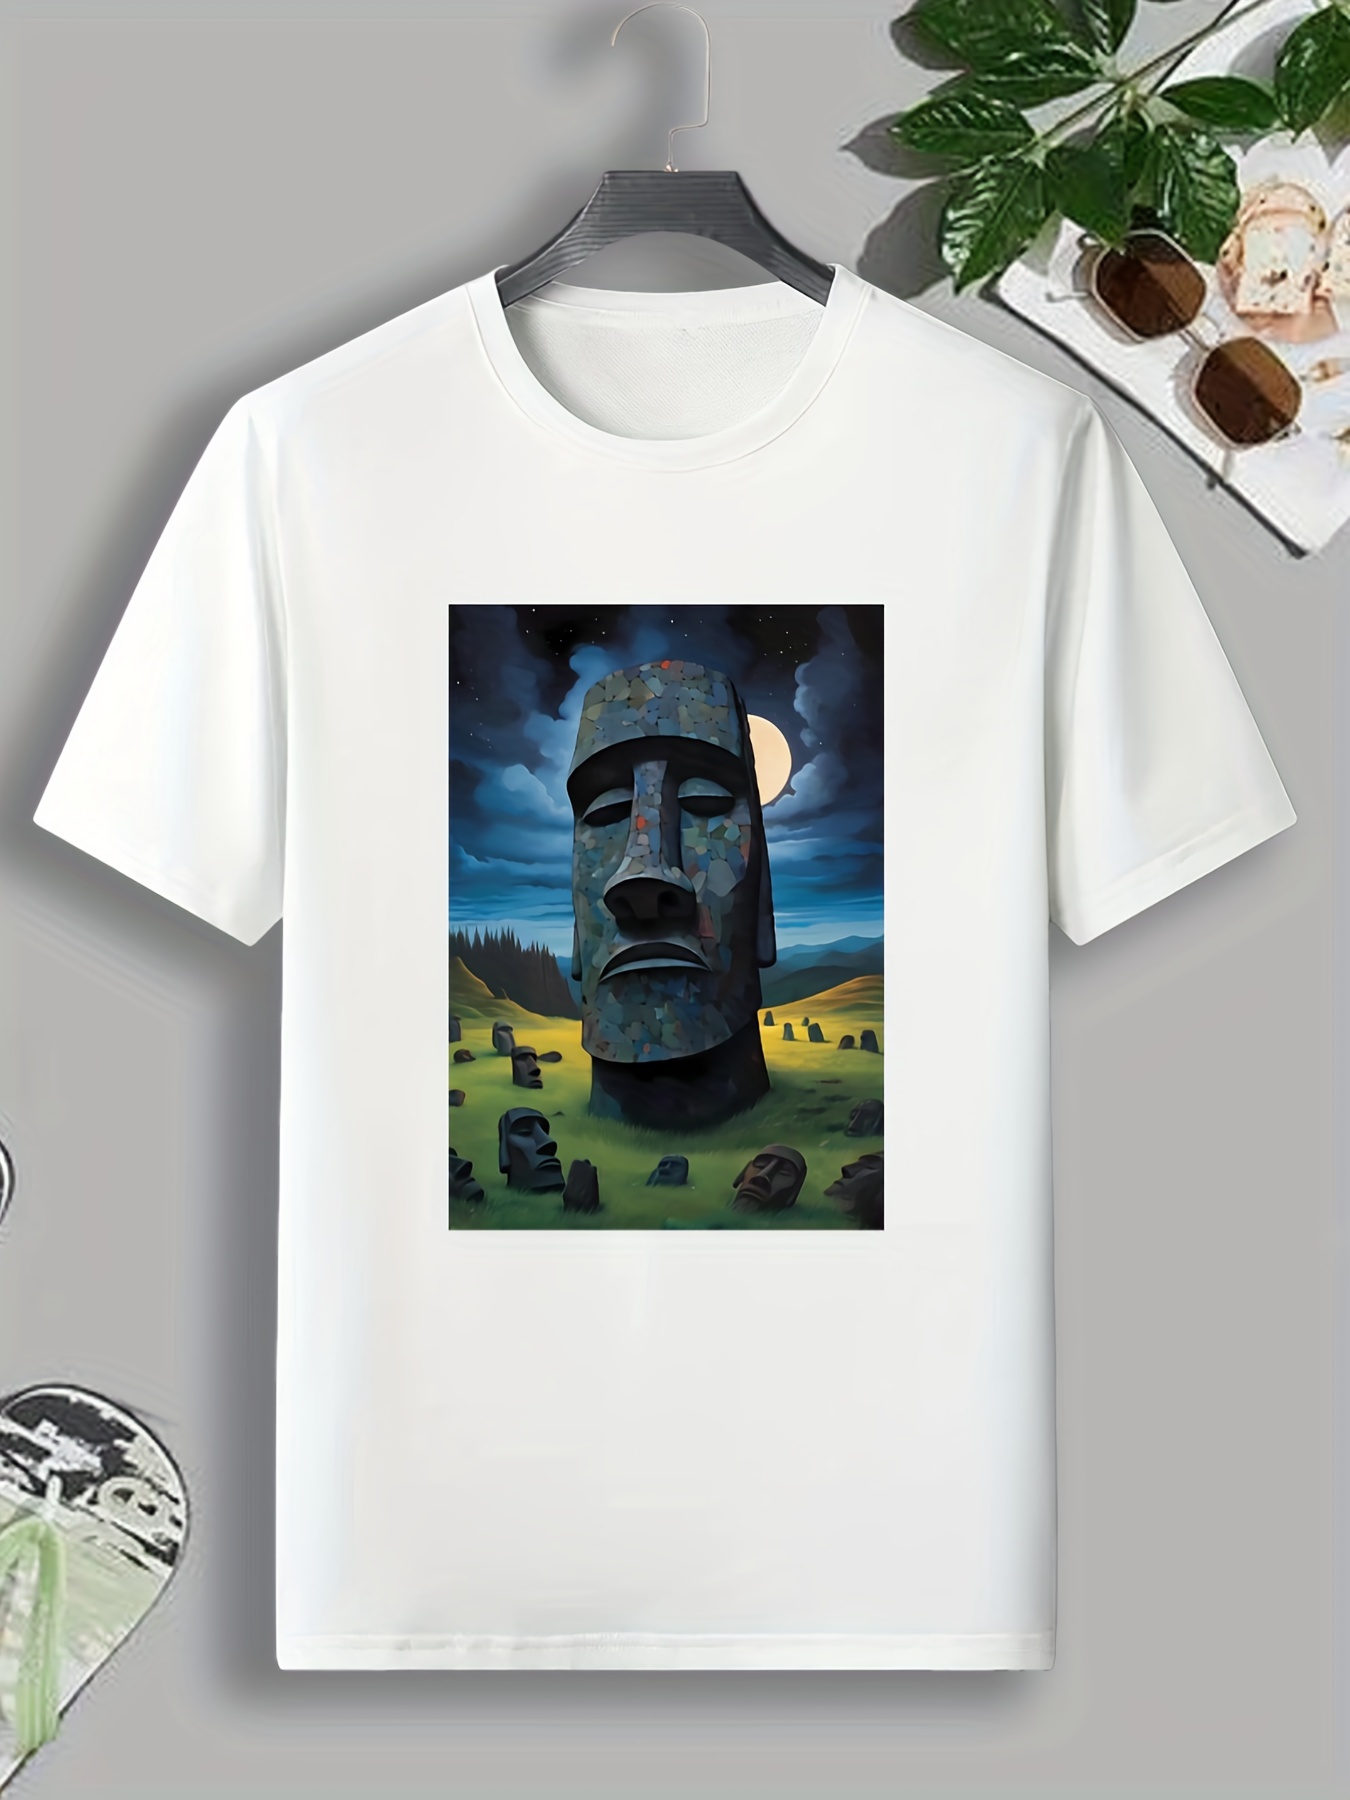 Easter Island Heads T-Shirts, Easter Island T-Shirts, Moai T